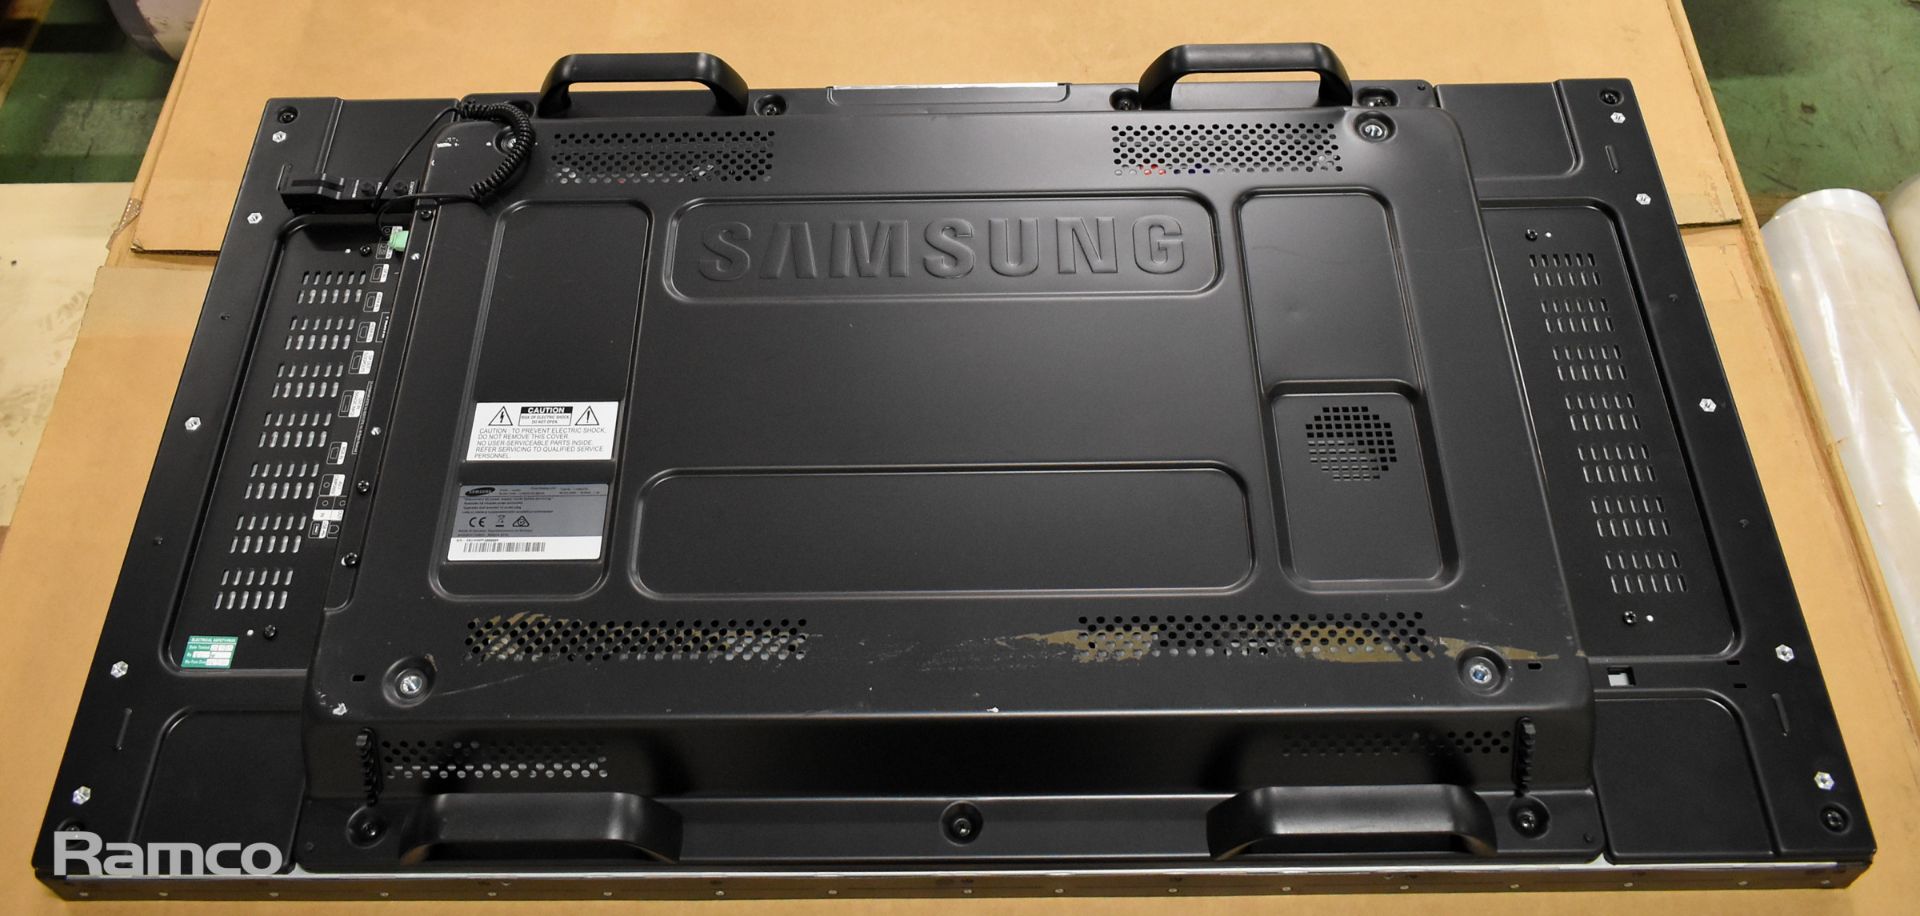 Samsung UD46C 46 inch LED backlit LCD display, Samsung UD46C 46 inch LED backlit LCD display - Image 2 of 8